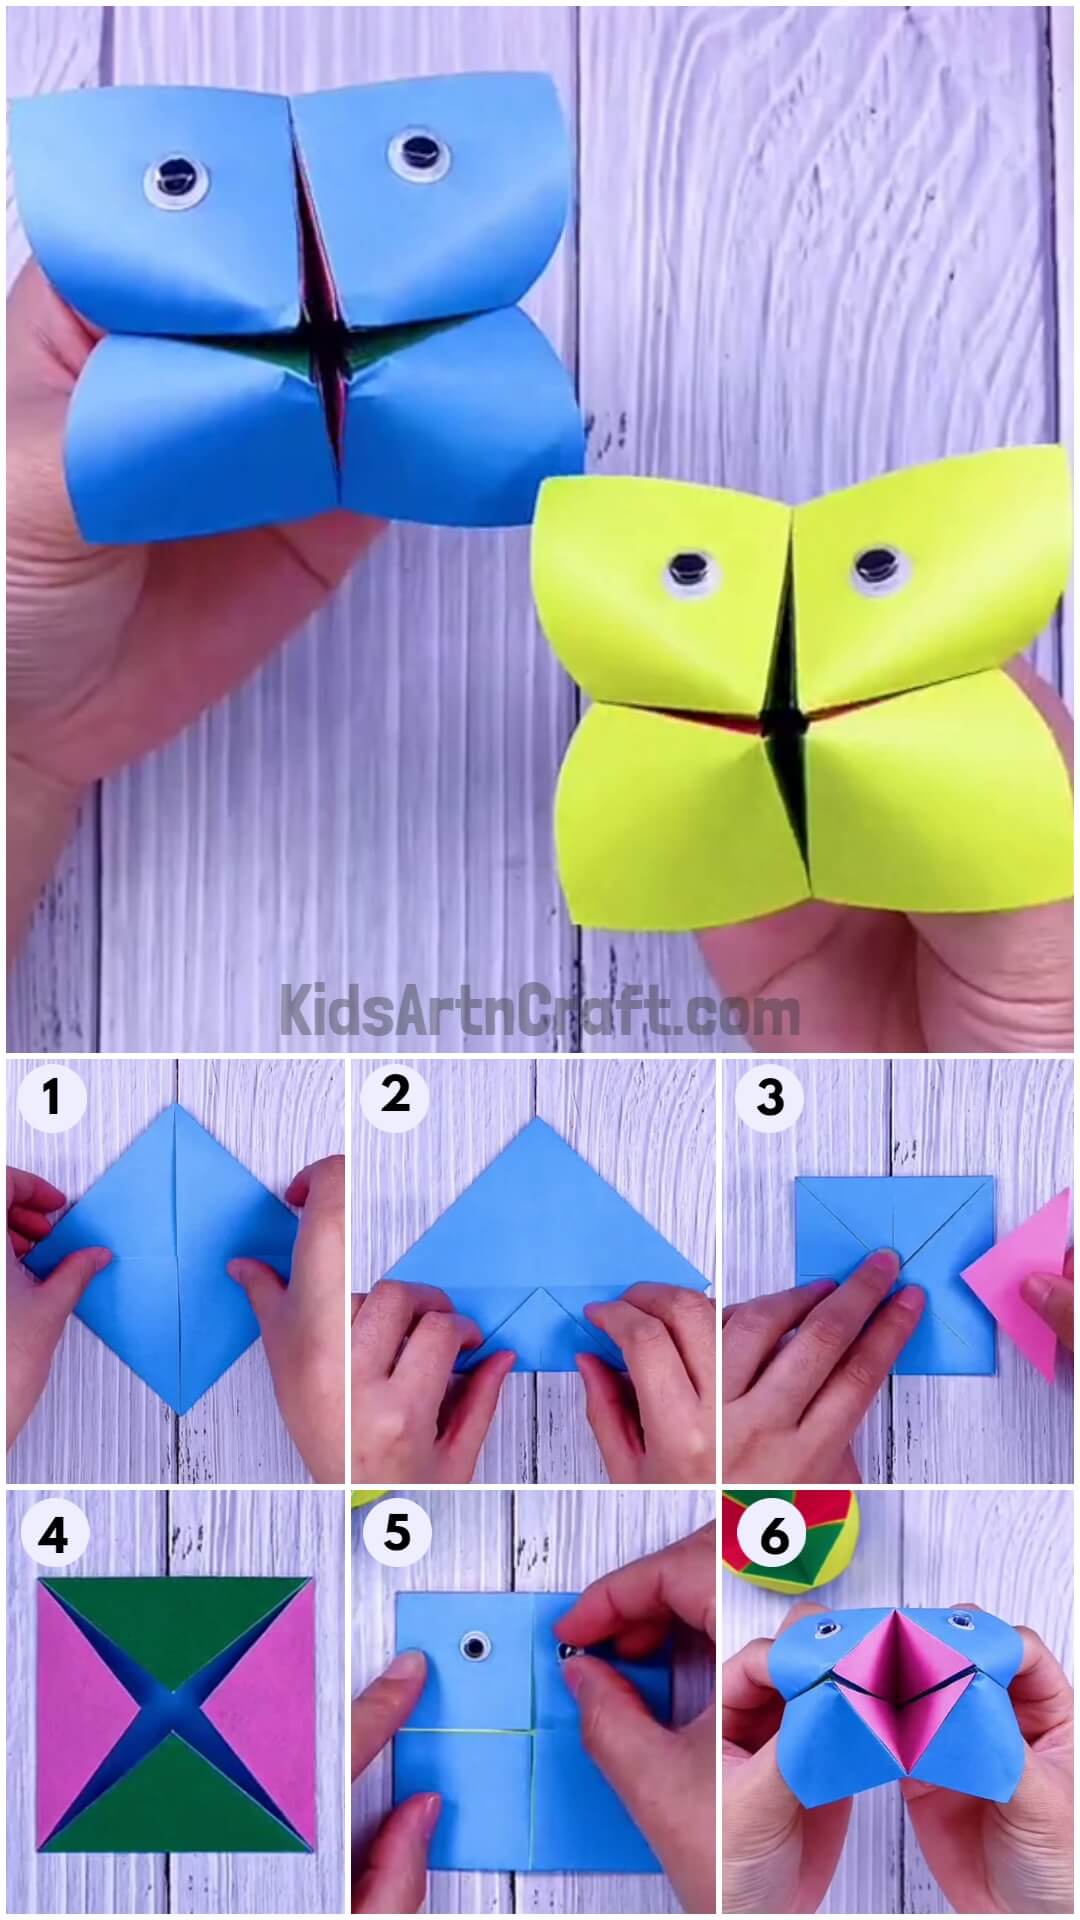 Easy Origami Paper Paku Paku Step-by-Step Tutorial for Kids